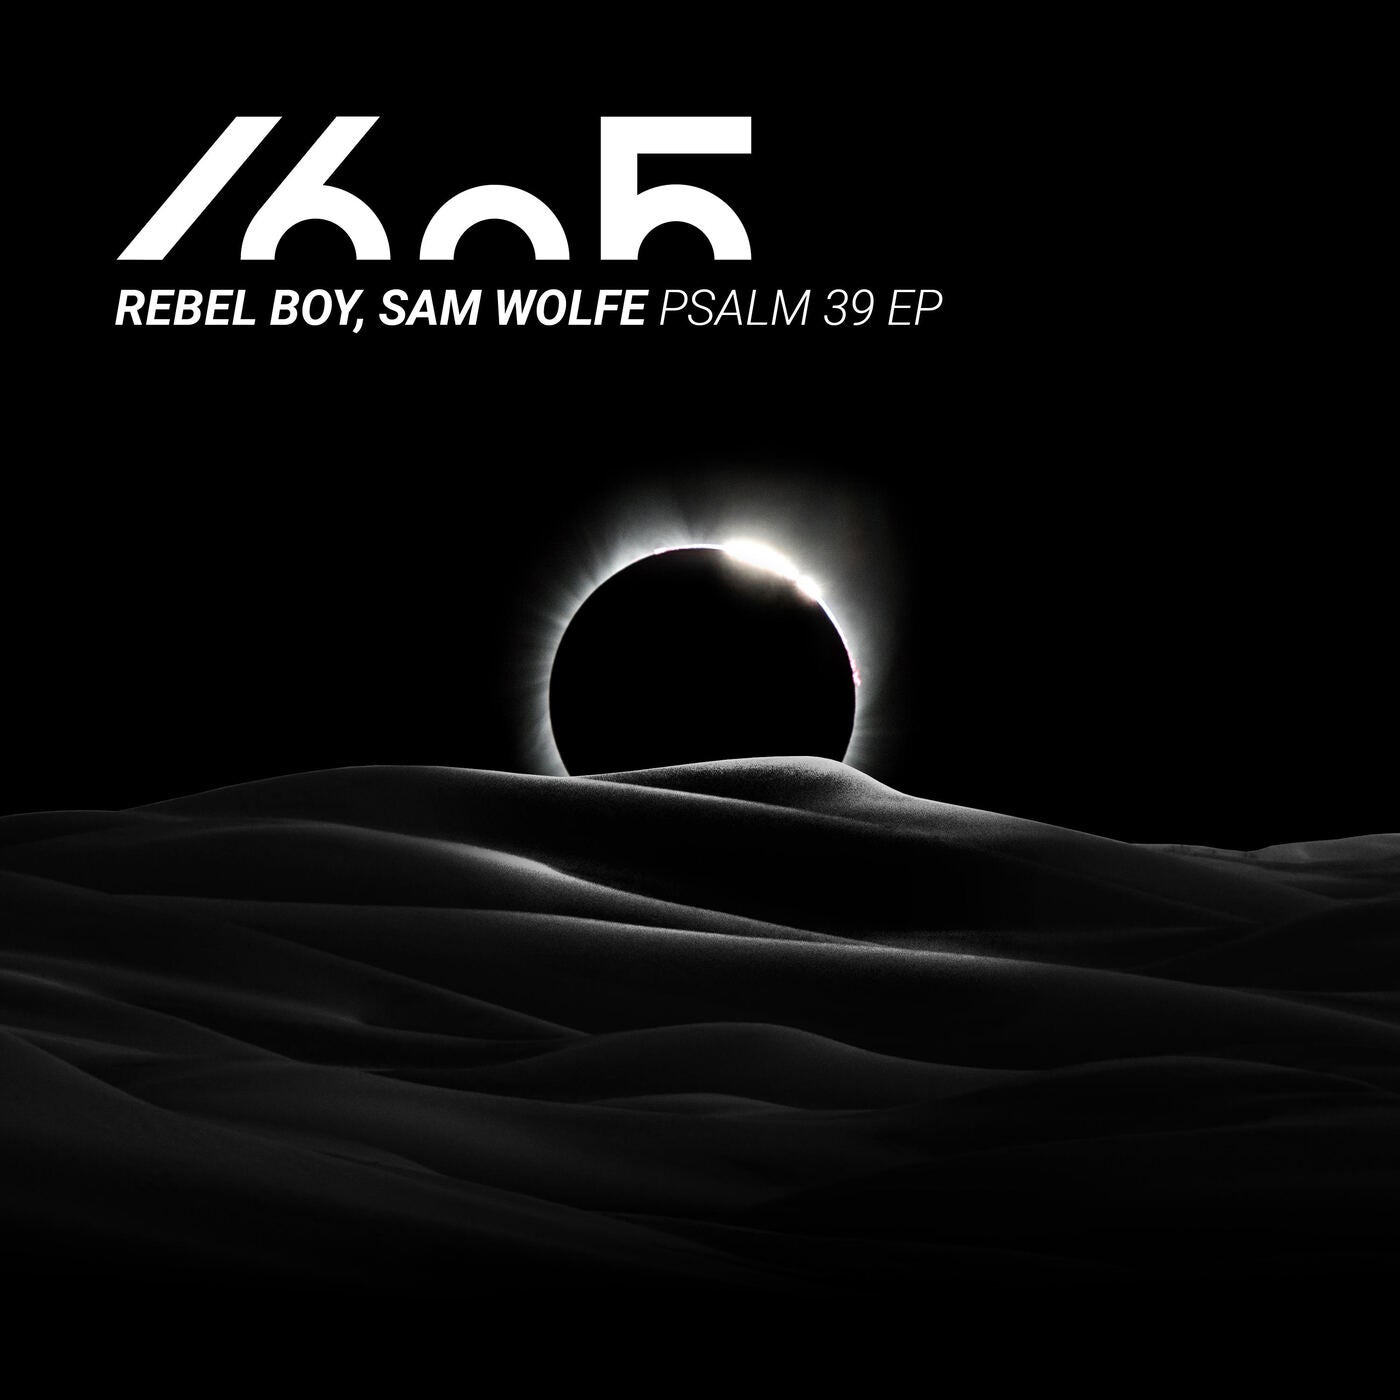 Download Rebel Boy, SAM WOLFE - Psalm 39 EP on Electrobuzz